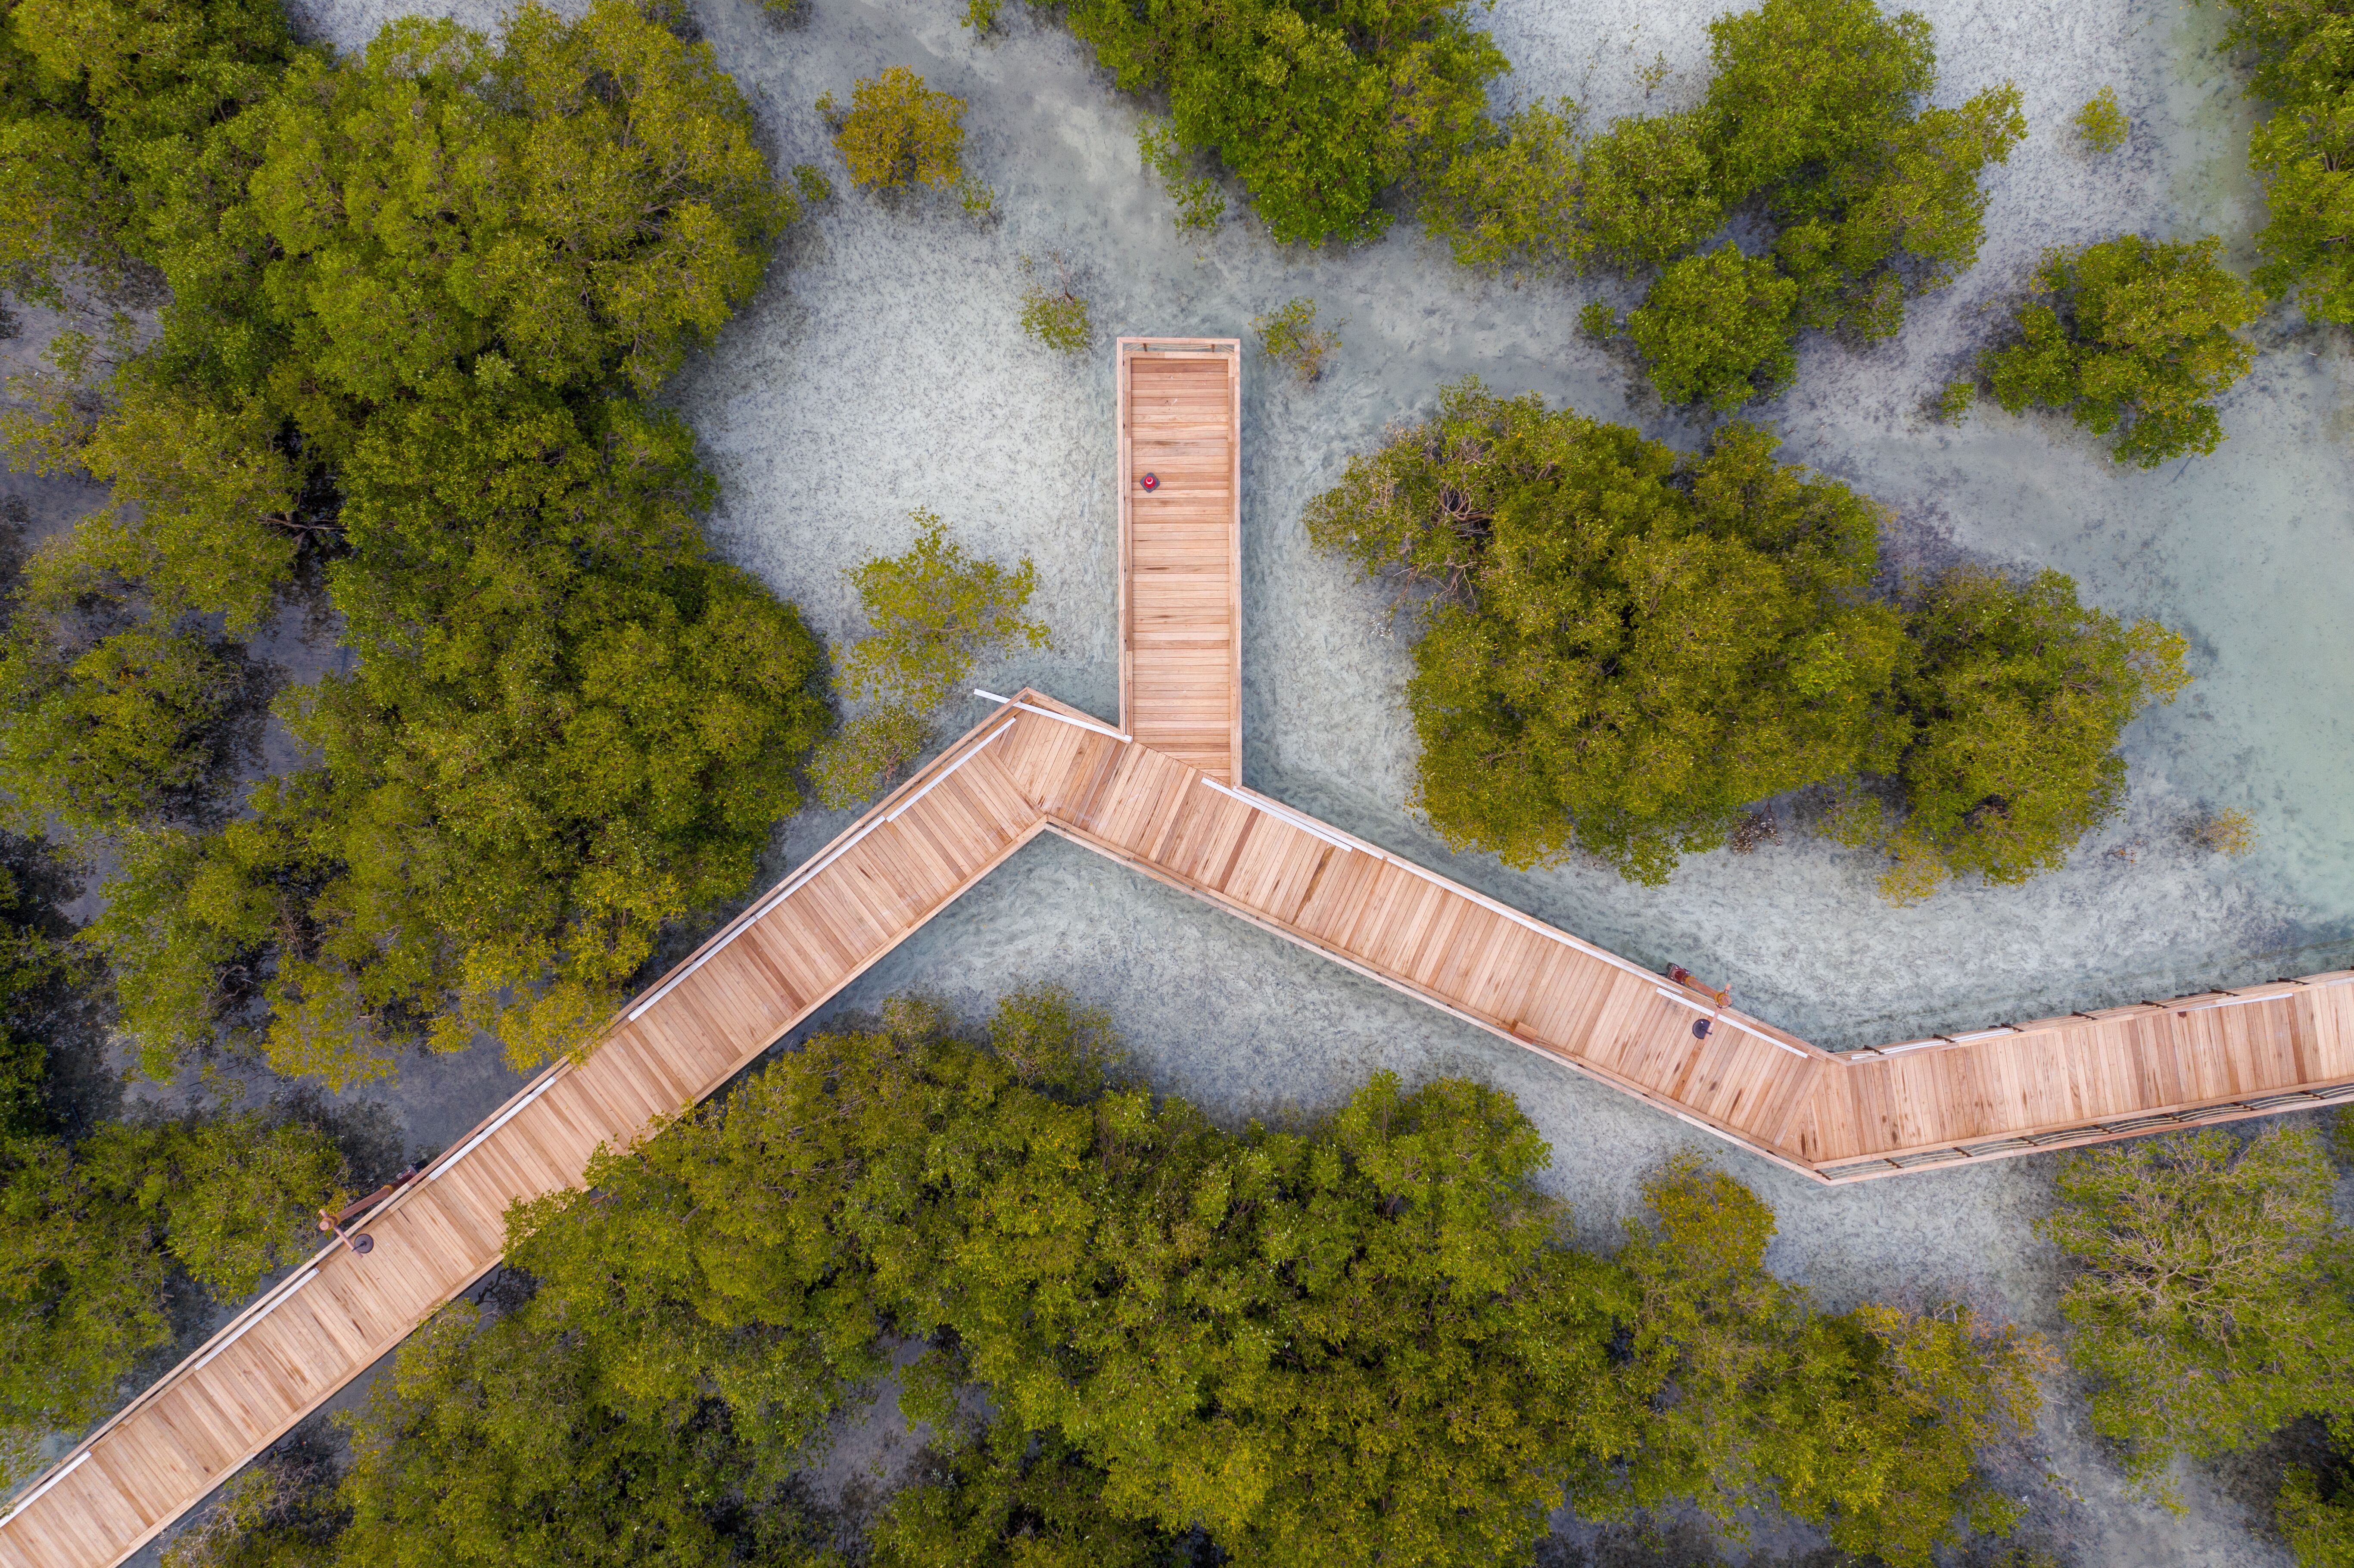 A bird's eye view of the wooden bridge at Jubail Mangrove Park